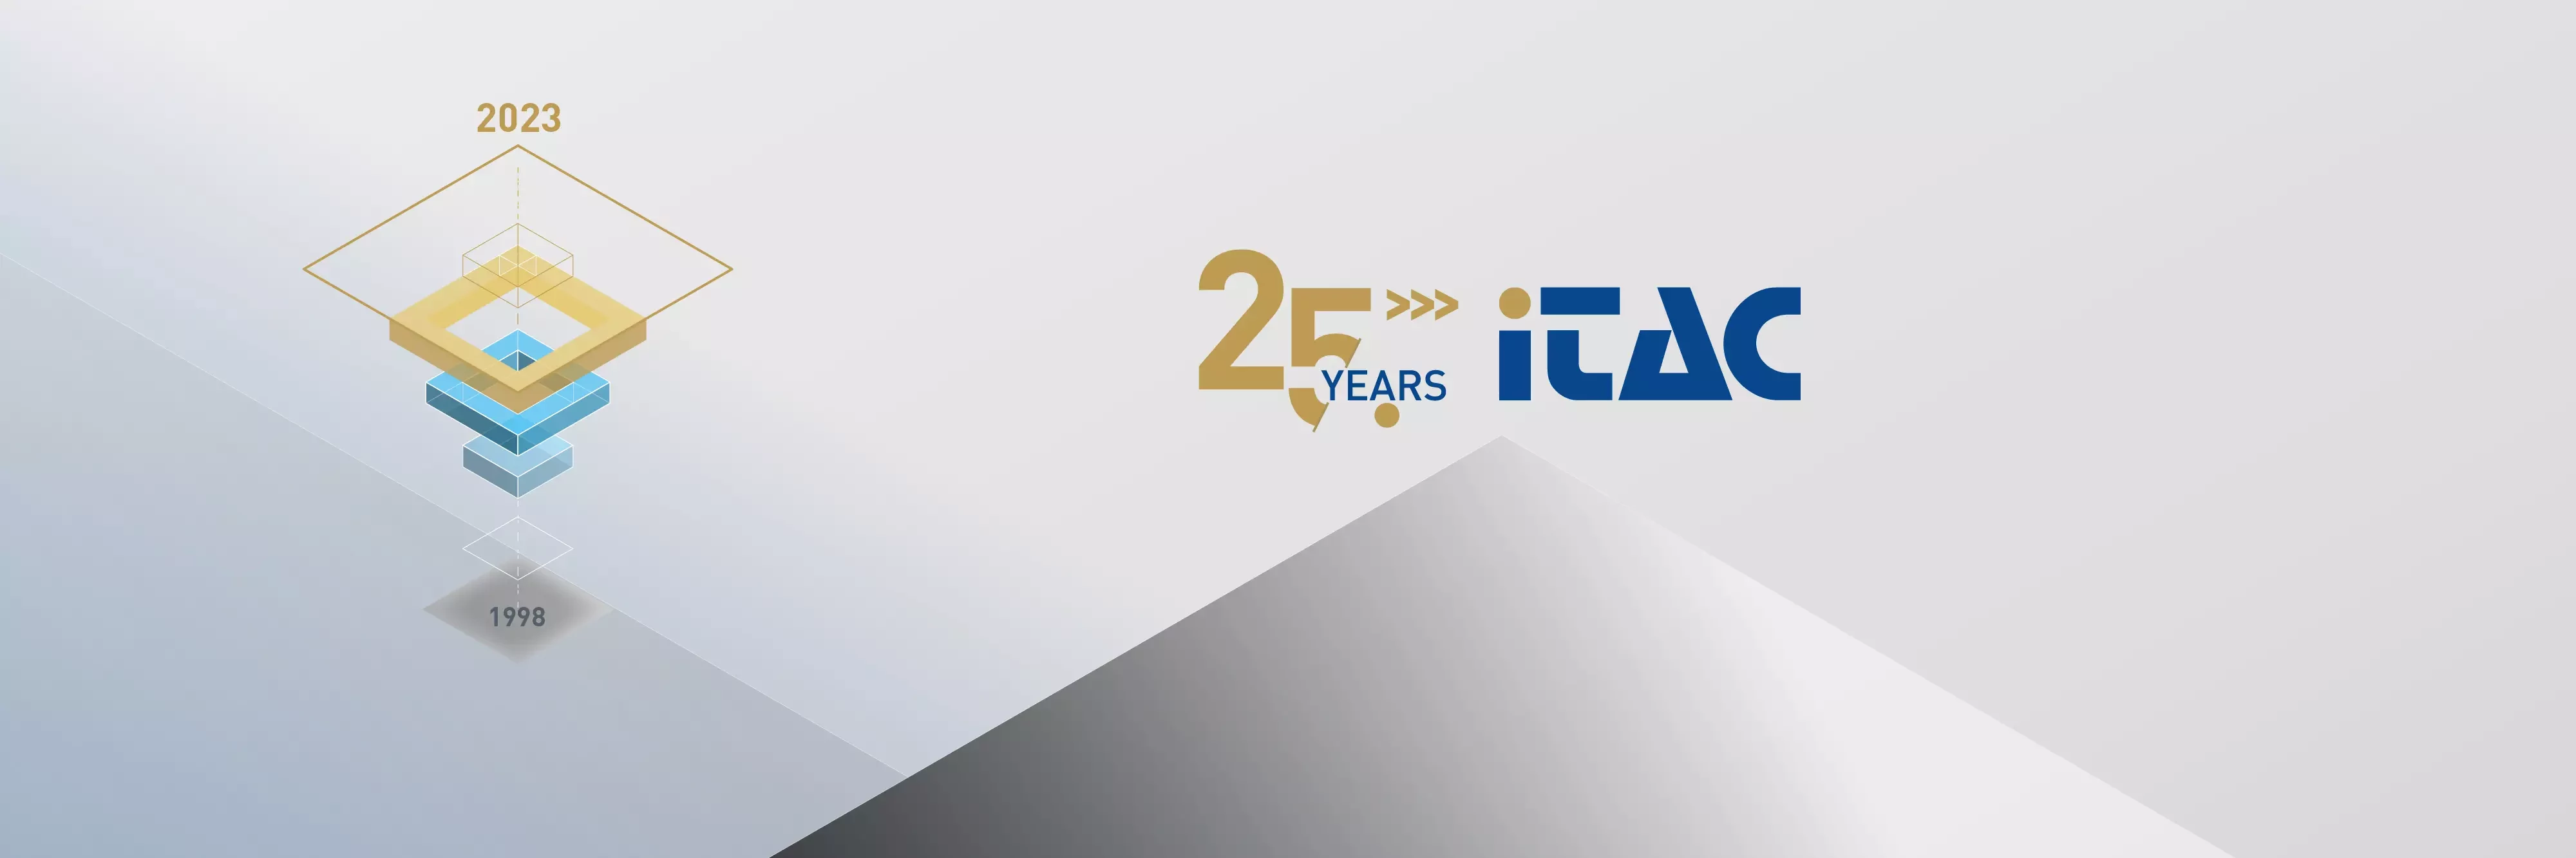 iTAC 25 years header